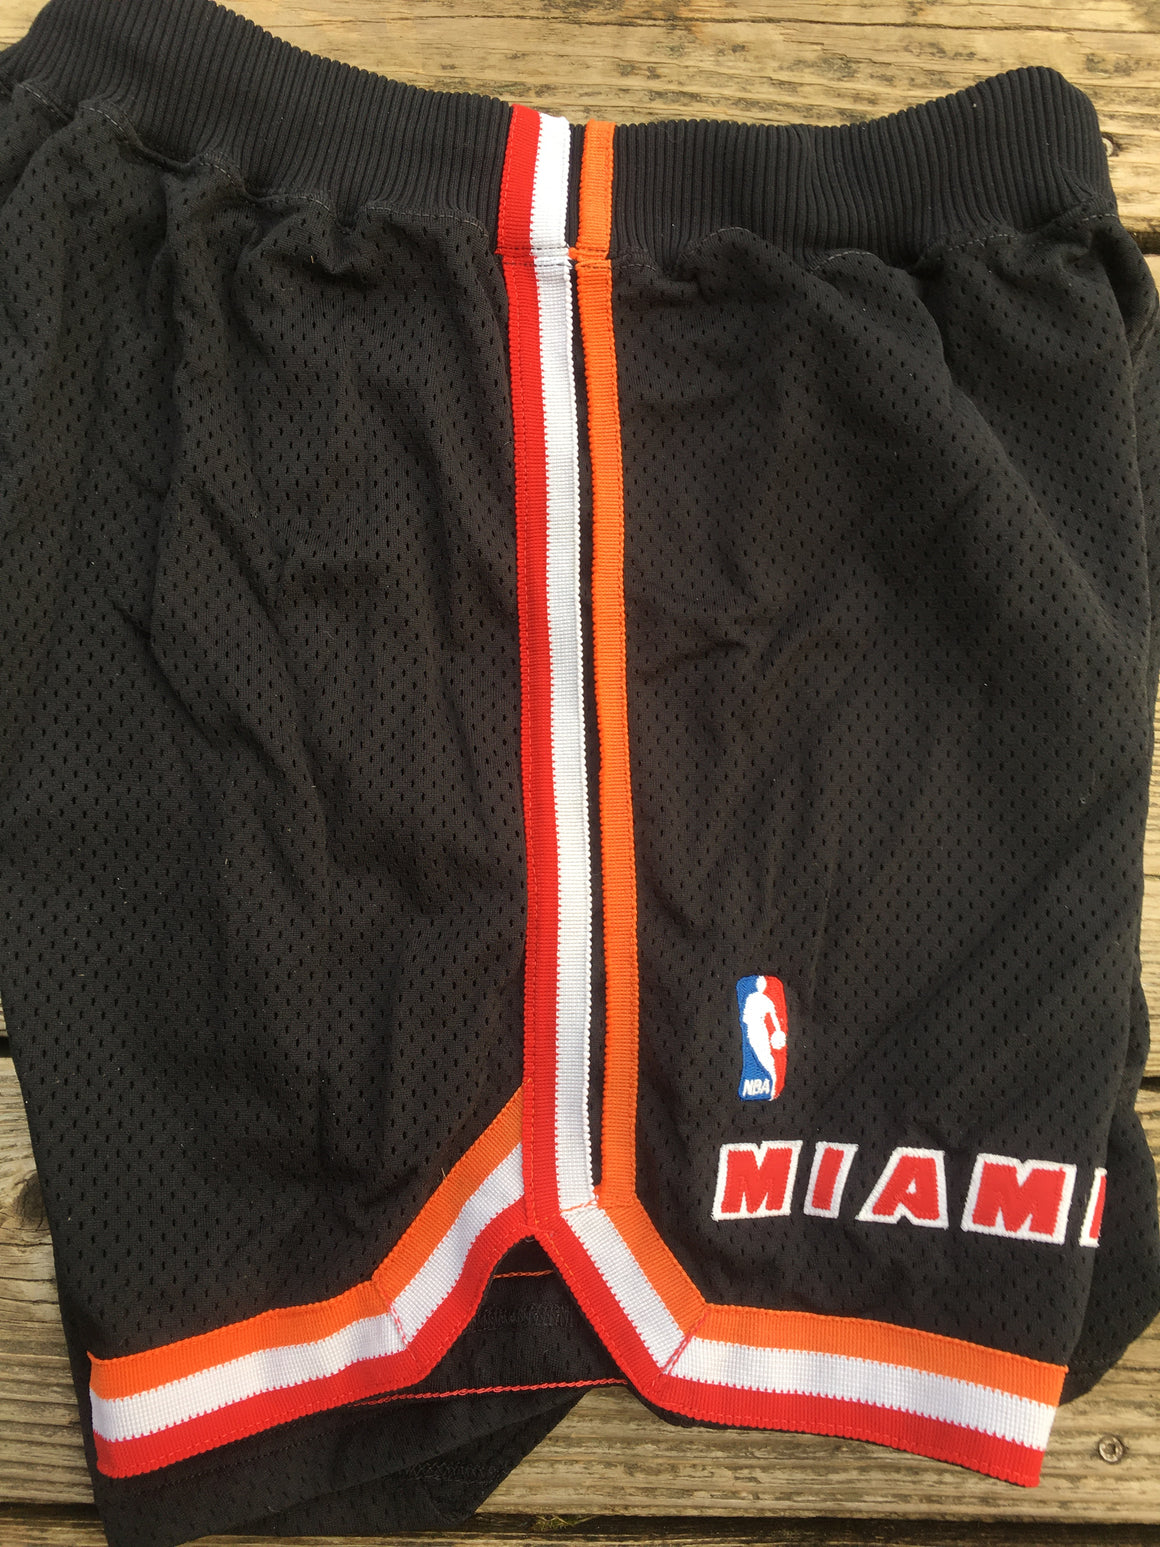 Miami Heat authentic shorts - size 38